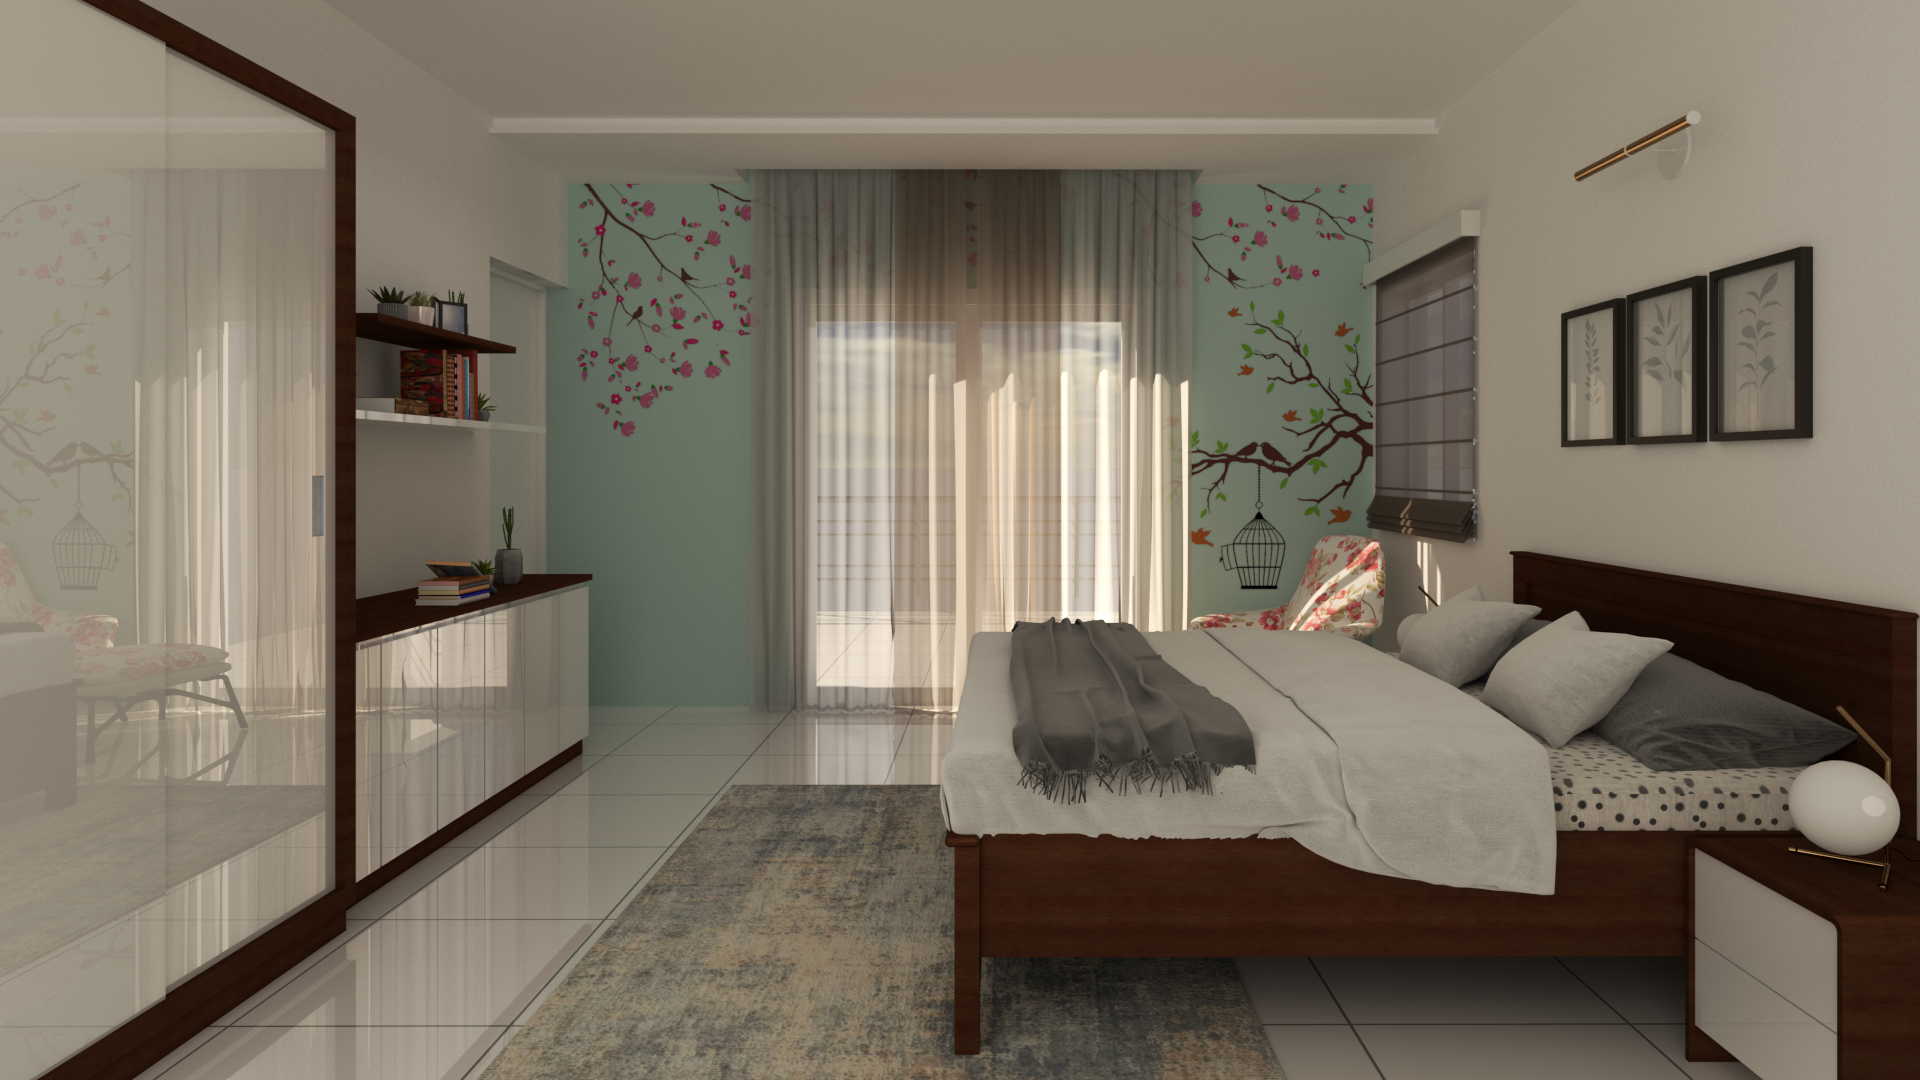 Minimalistic Bedroom Design